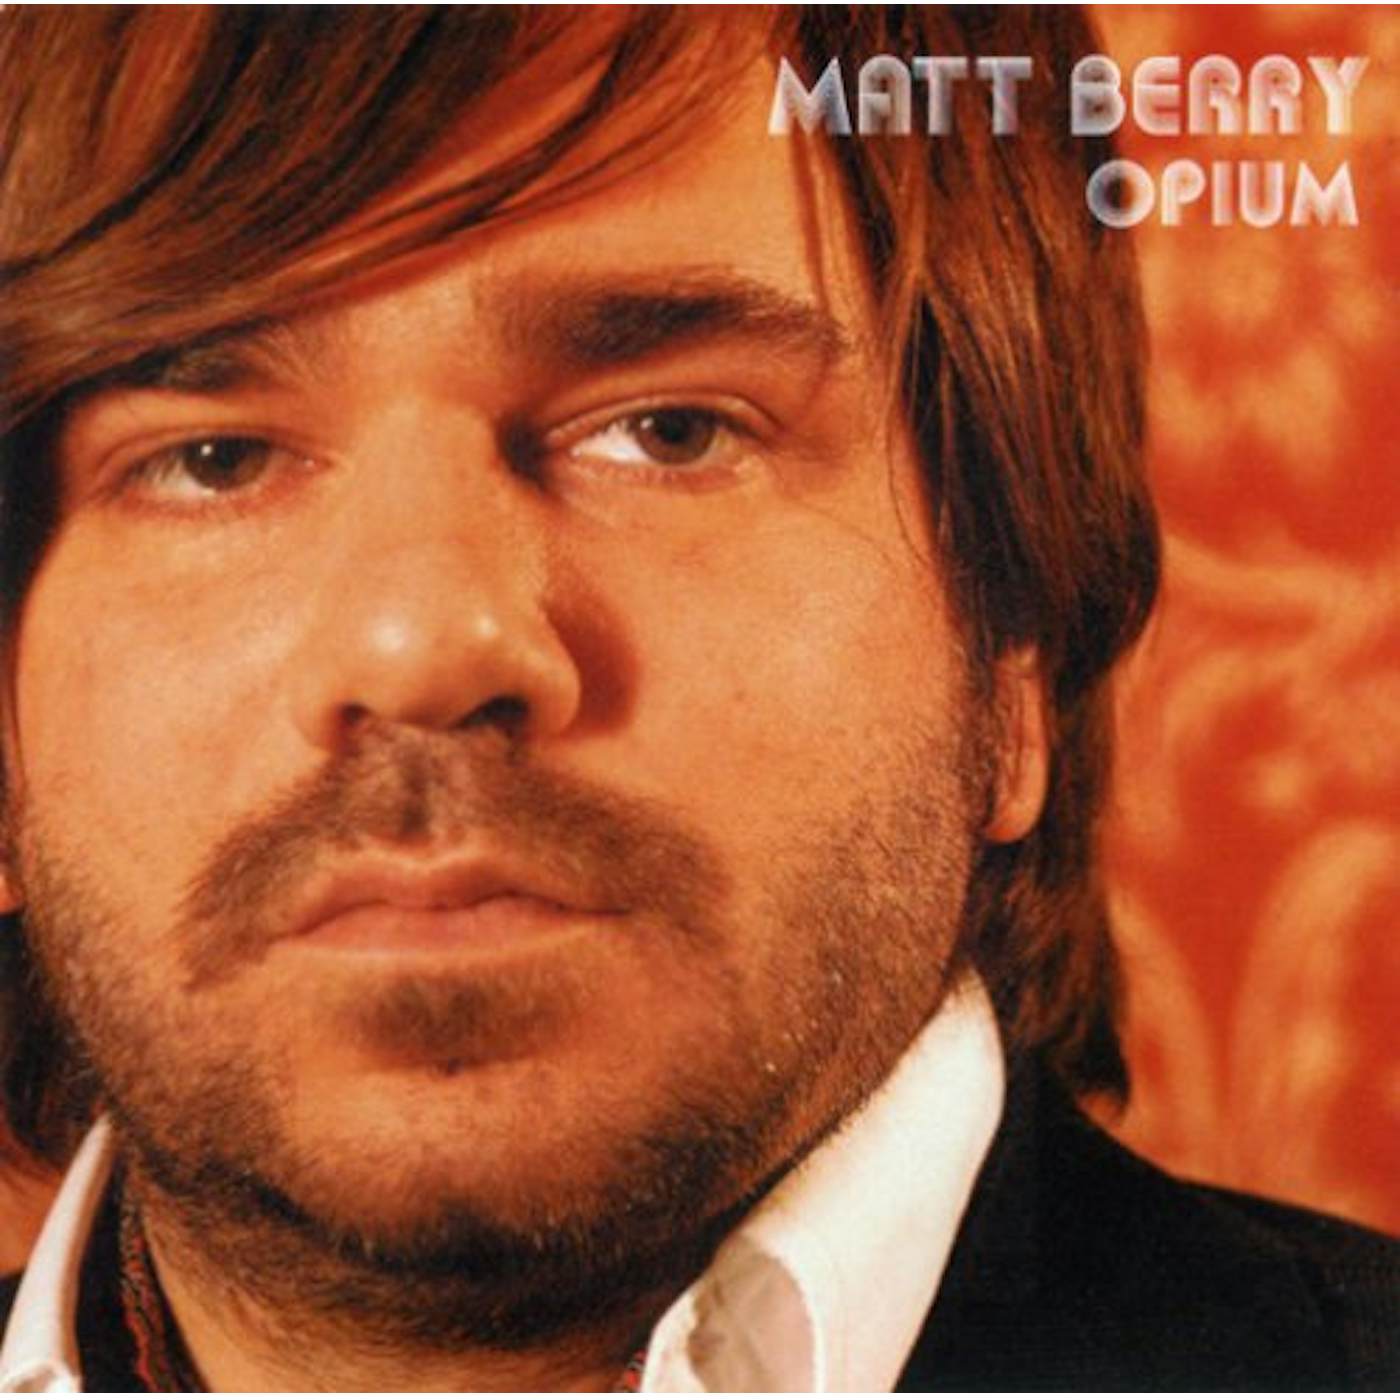 Matt Berry Opium Vinyl Record